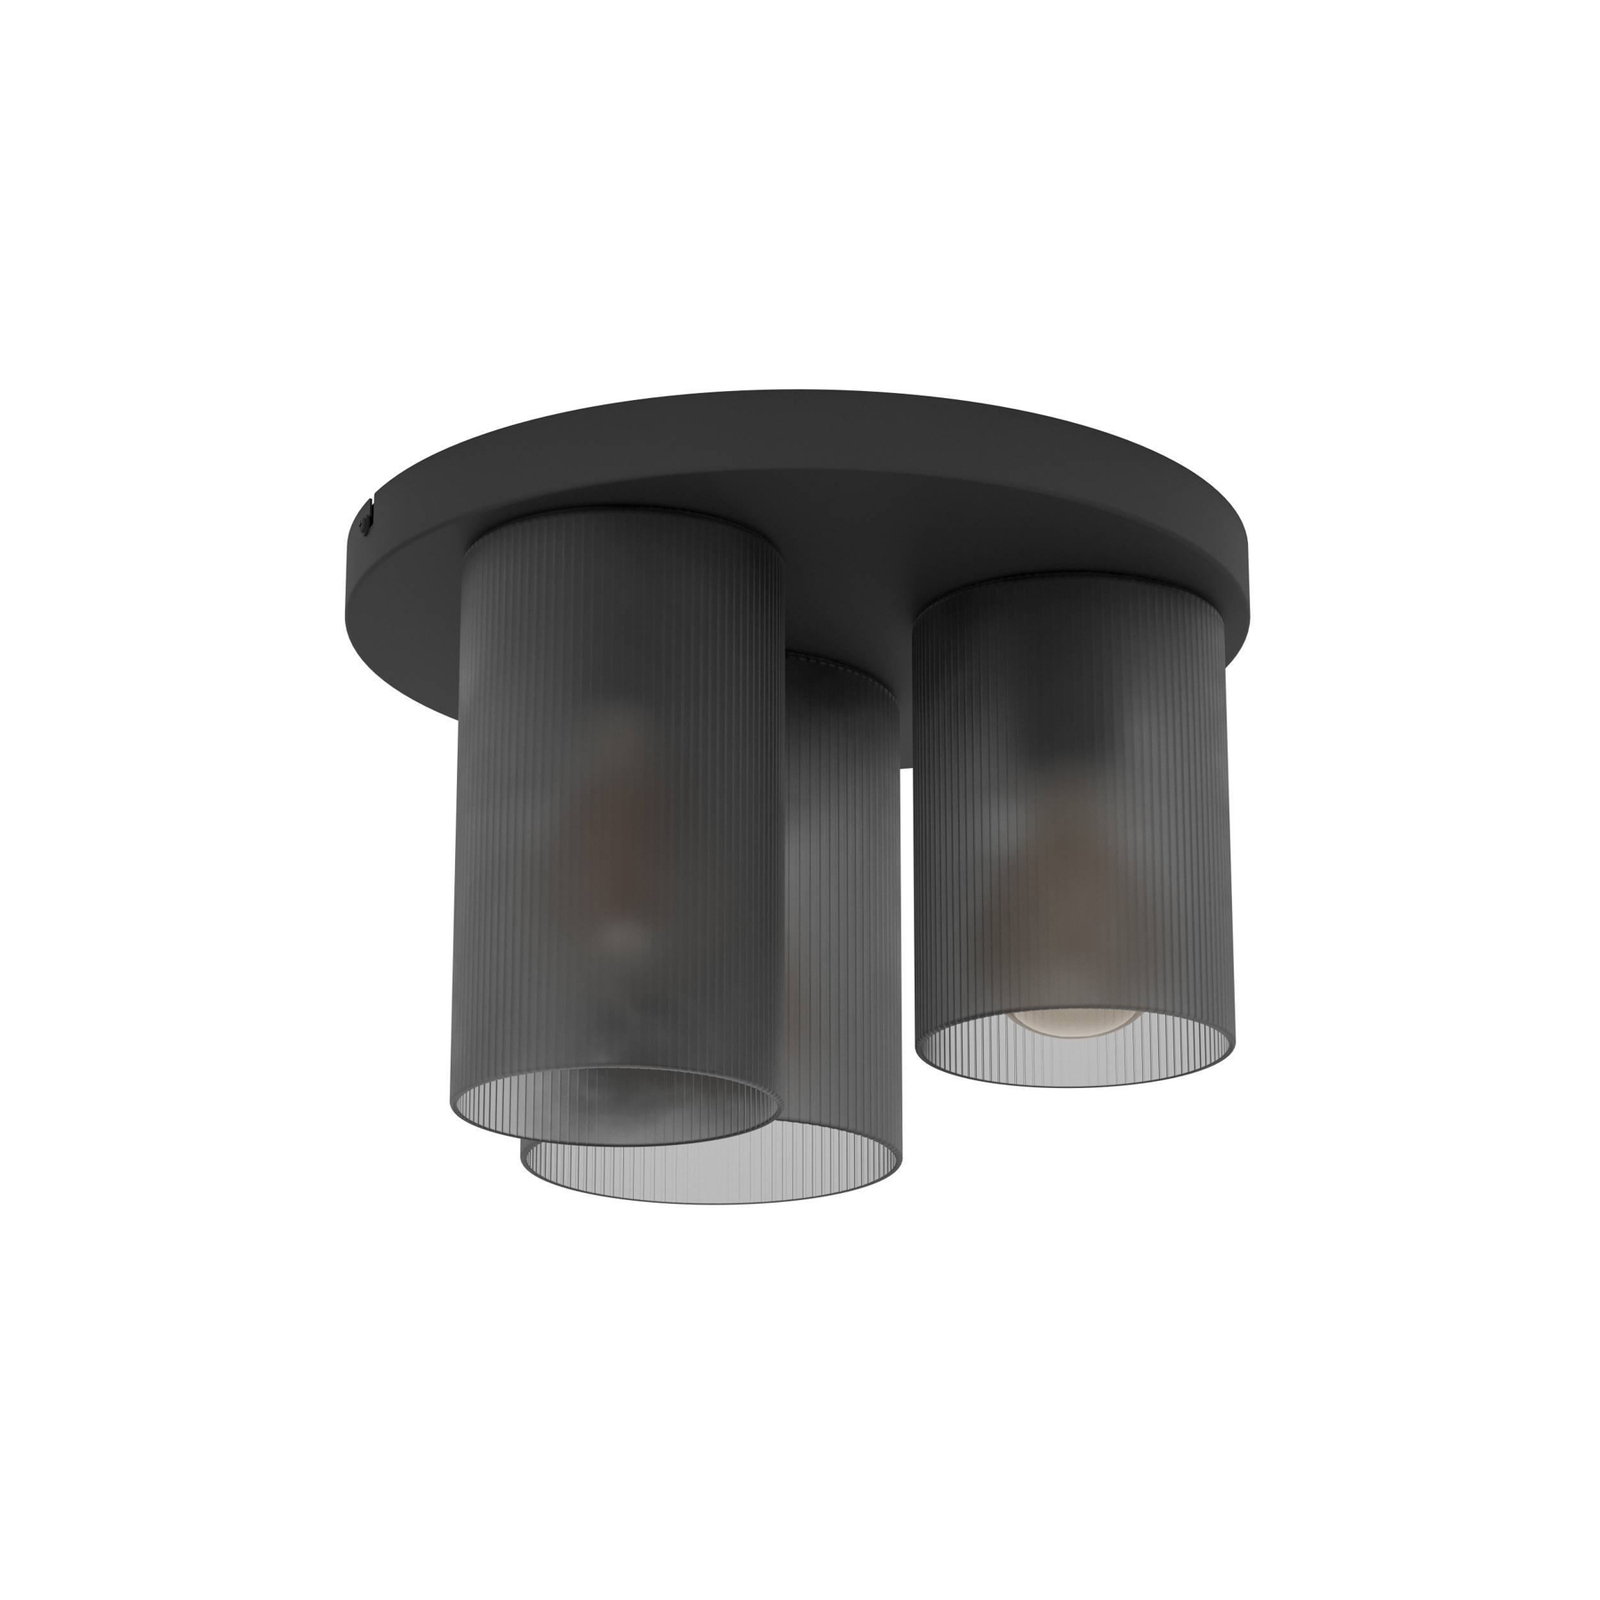 Colomera ceiling light, black/grey, 3-bulb.